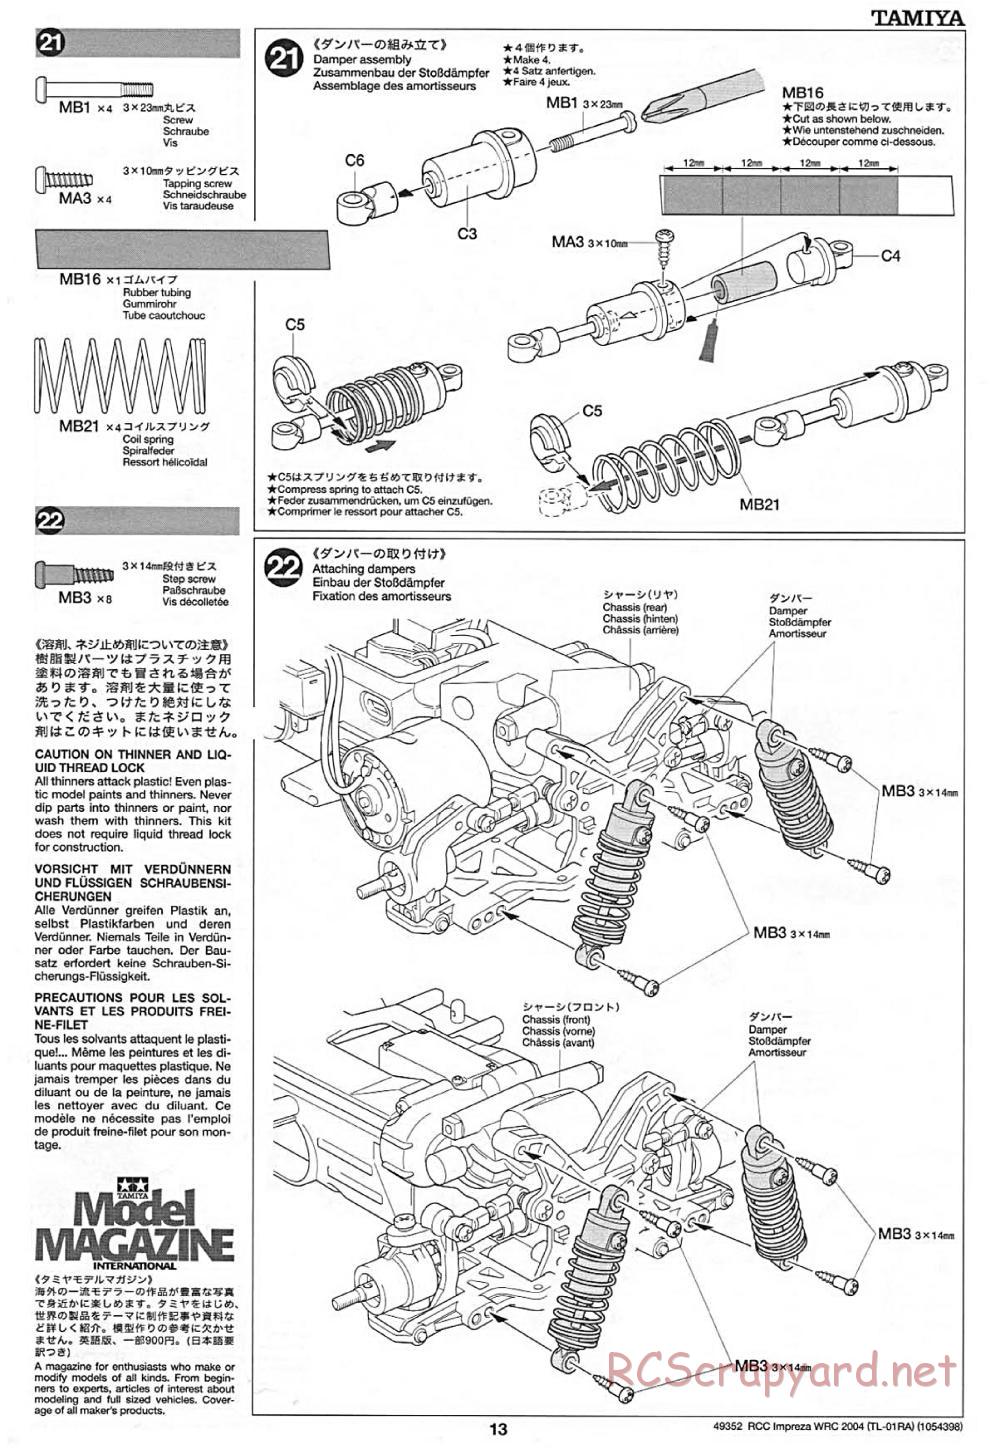 Tamiya - Subaru Impreza WRC 2004 Chassis - Manual - Page 13